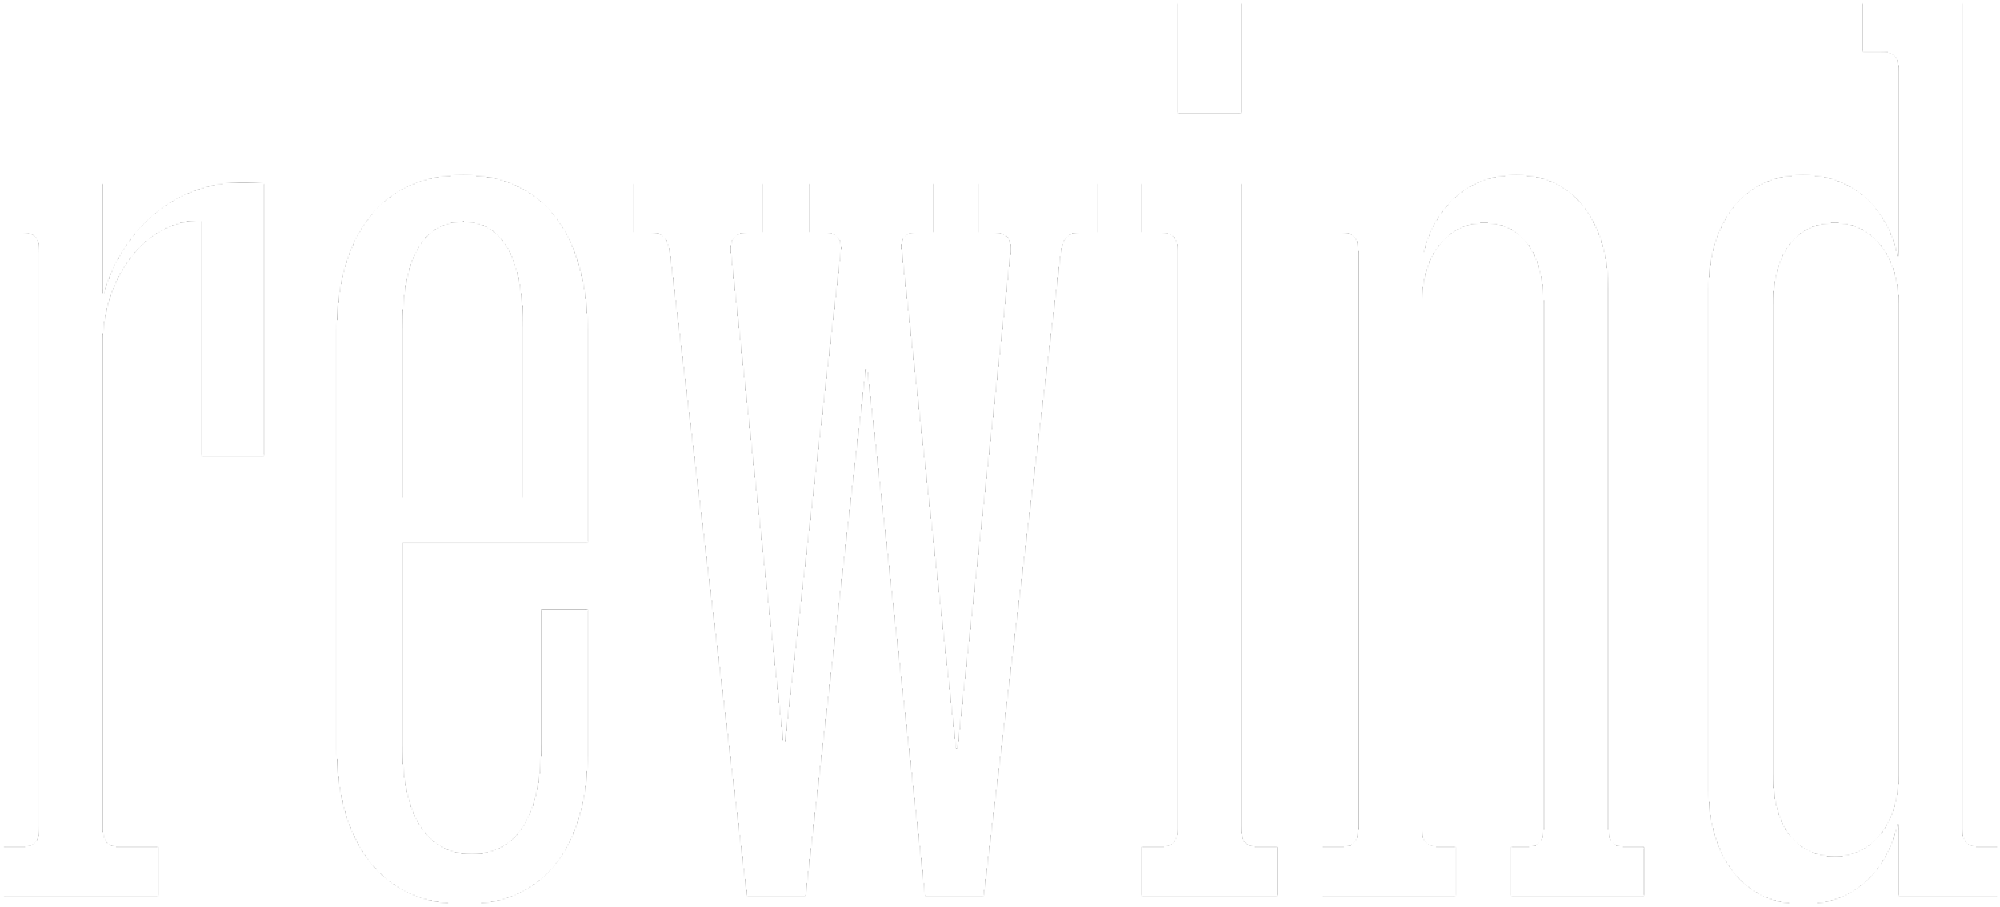 Rewind typography